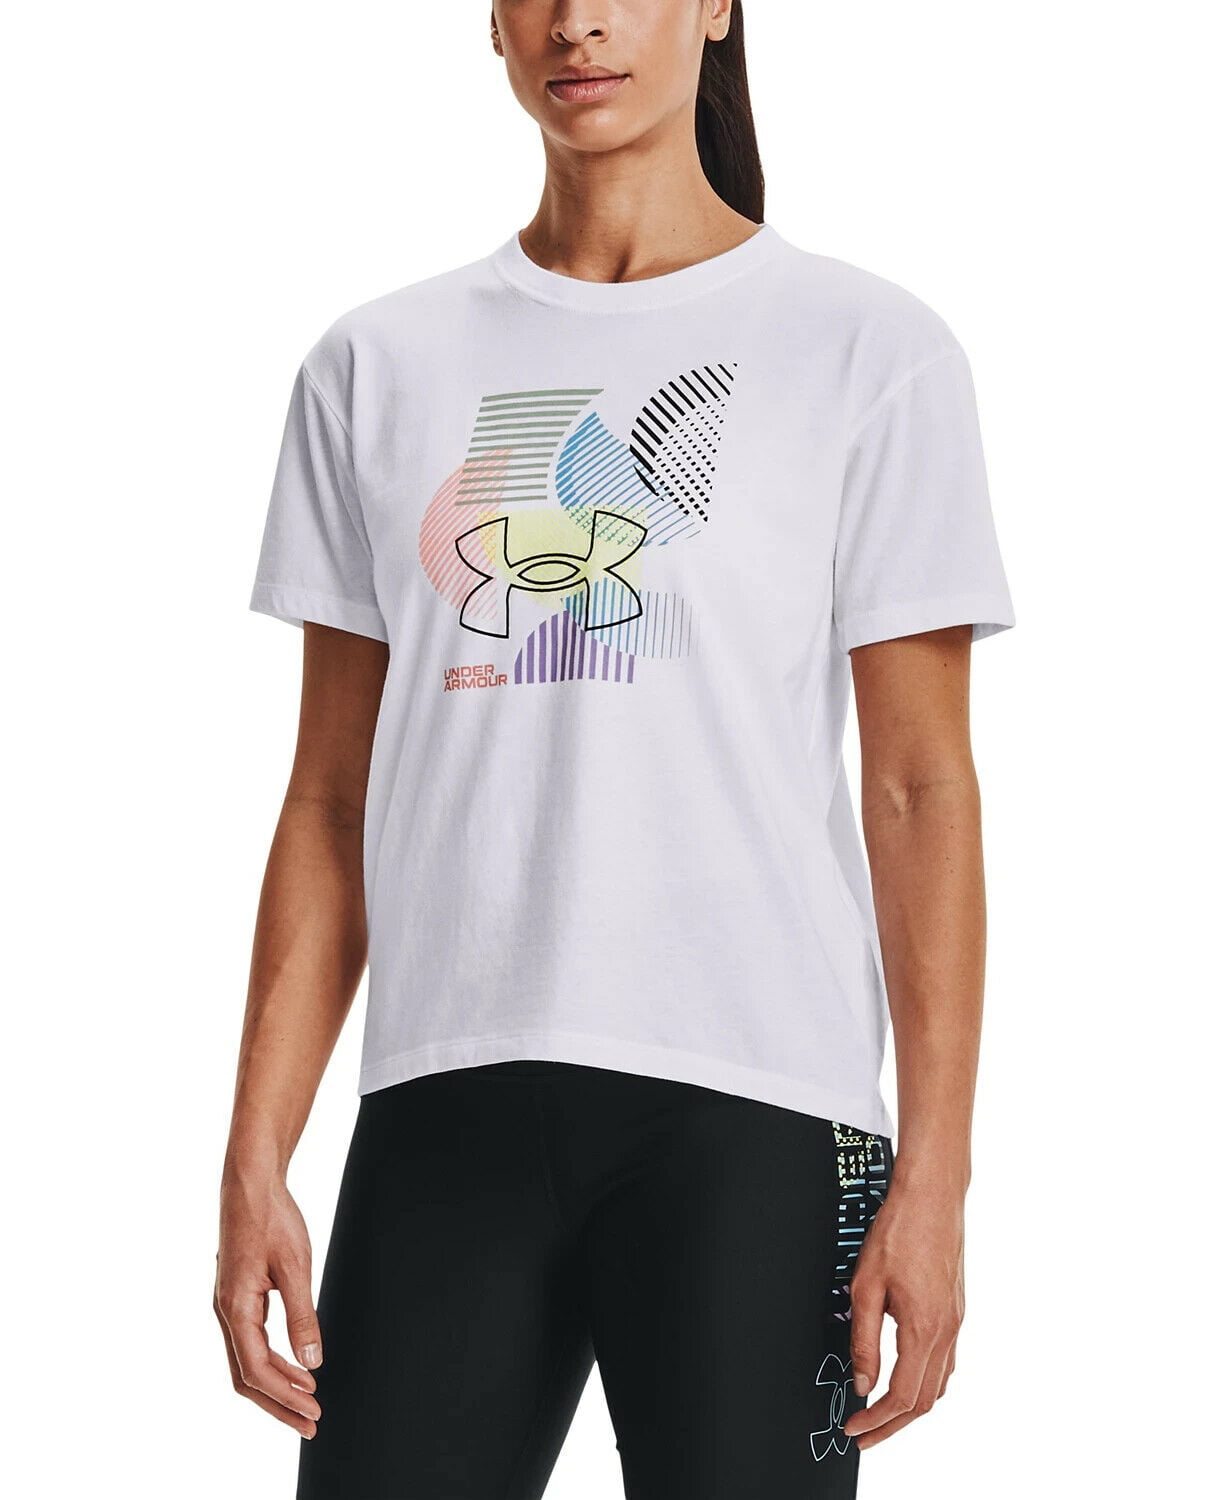 Under Armour Heatgear Women's Tech Graphic white T-shirt Mult sizes 166B 351bin 